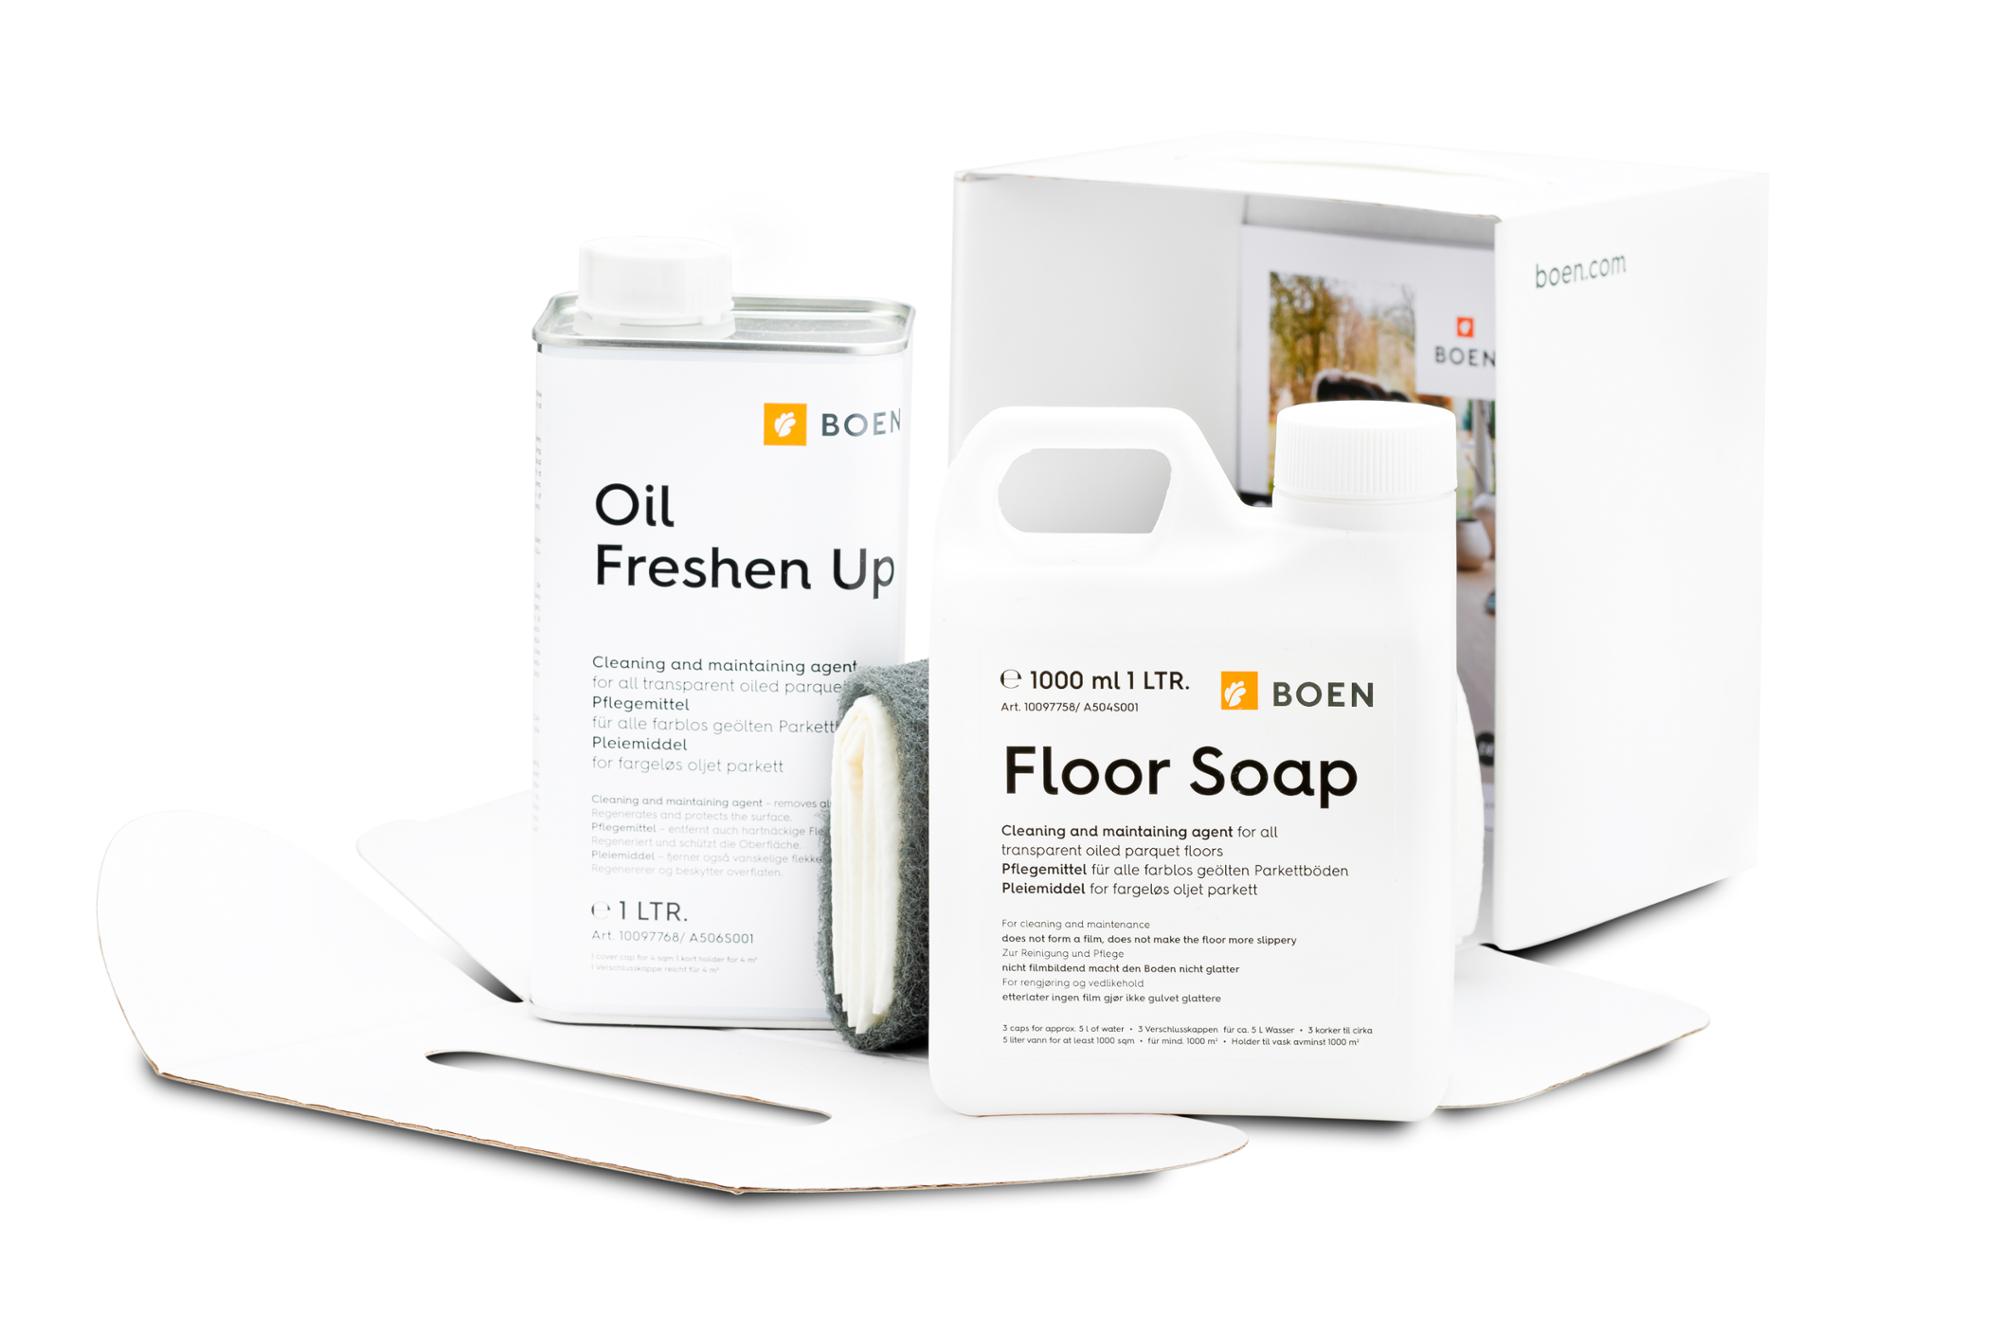 BOEN Care and maintenance kit for transparent oiled floors

Content: 1 litre Floor Soap + 1 litre Oil Freshen Up.